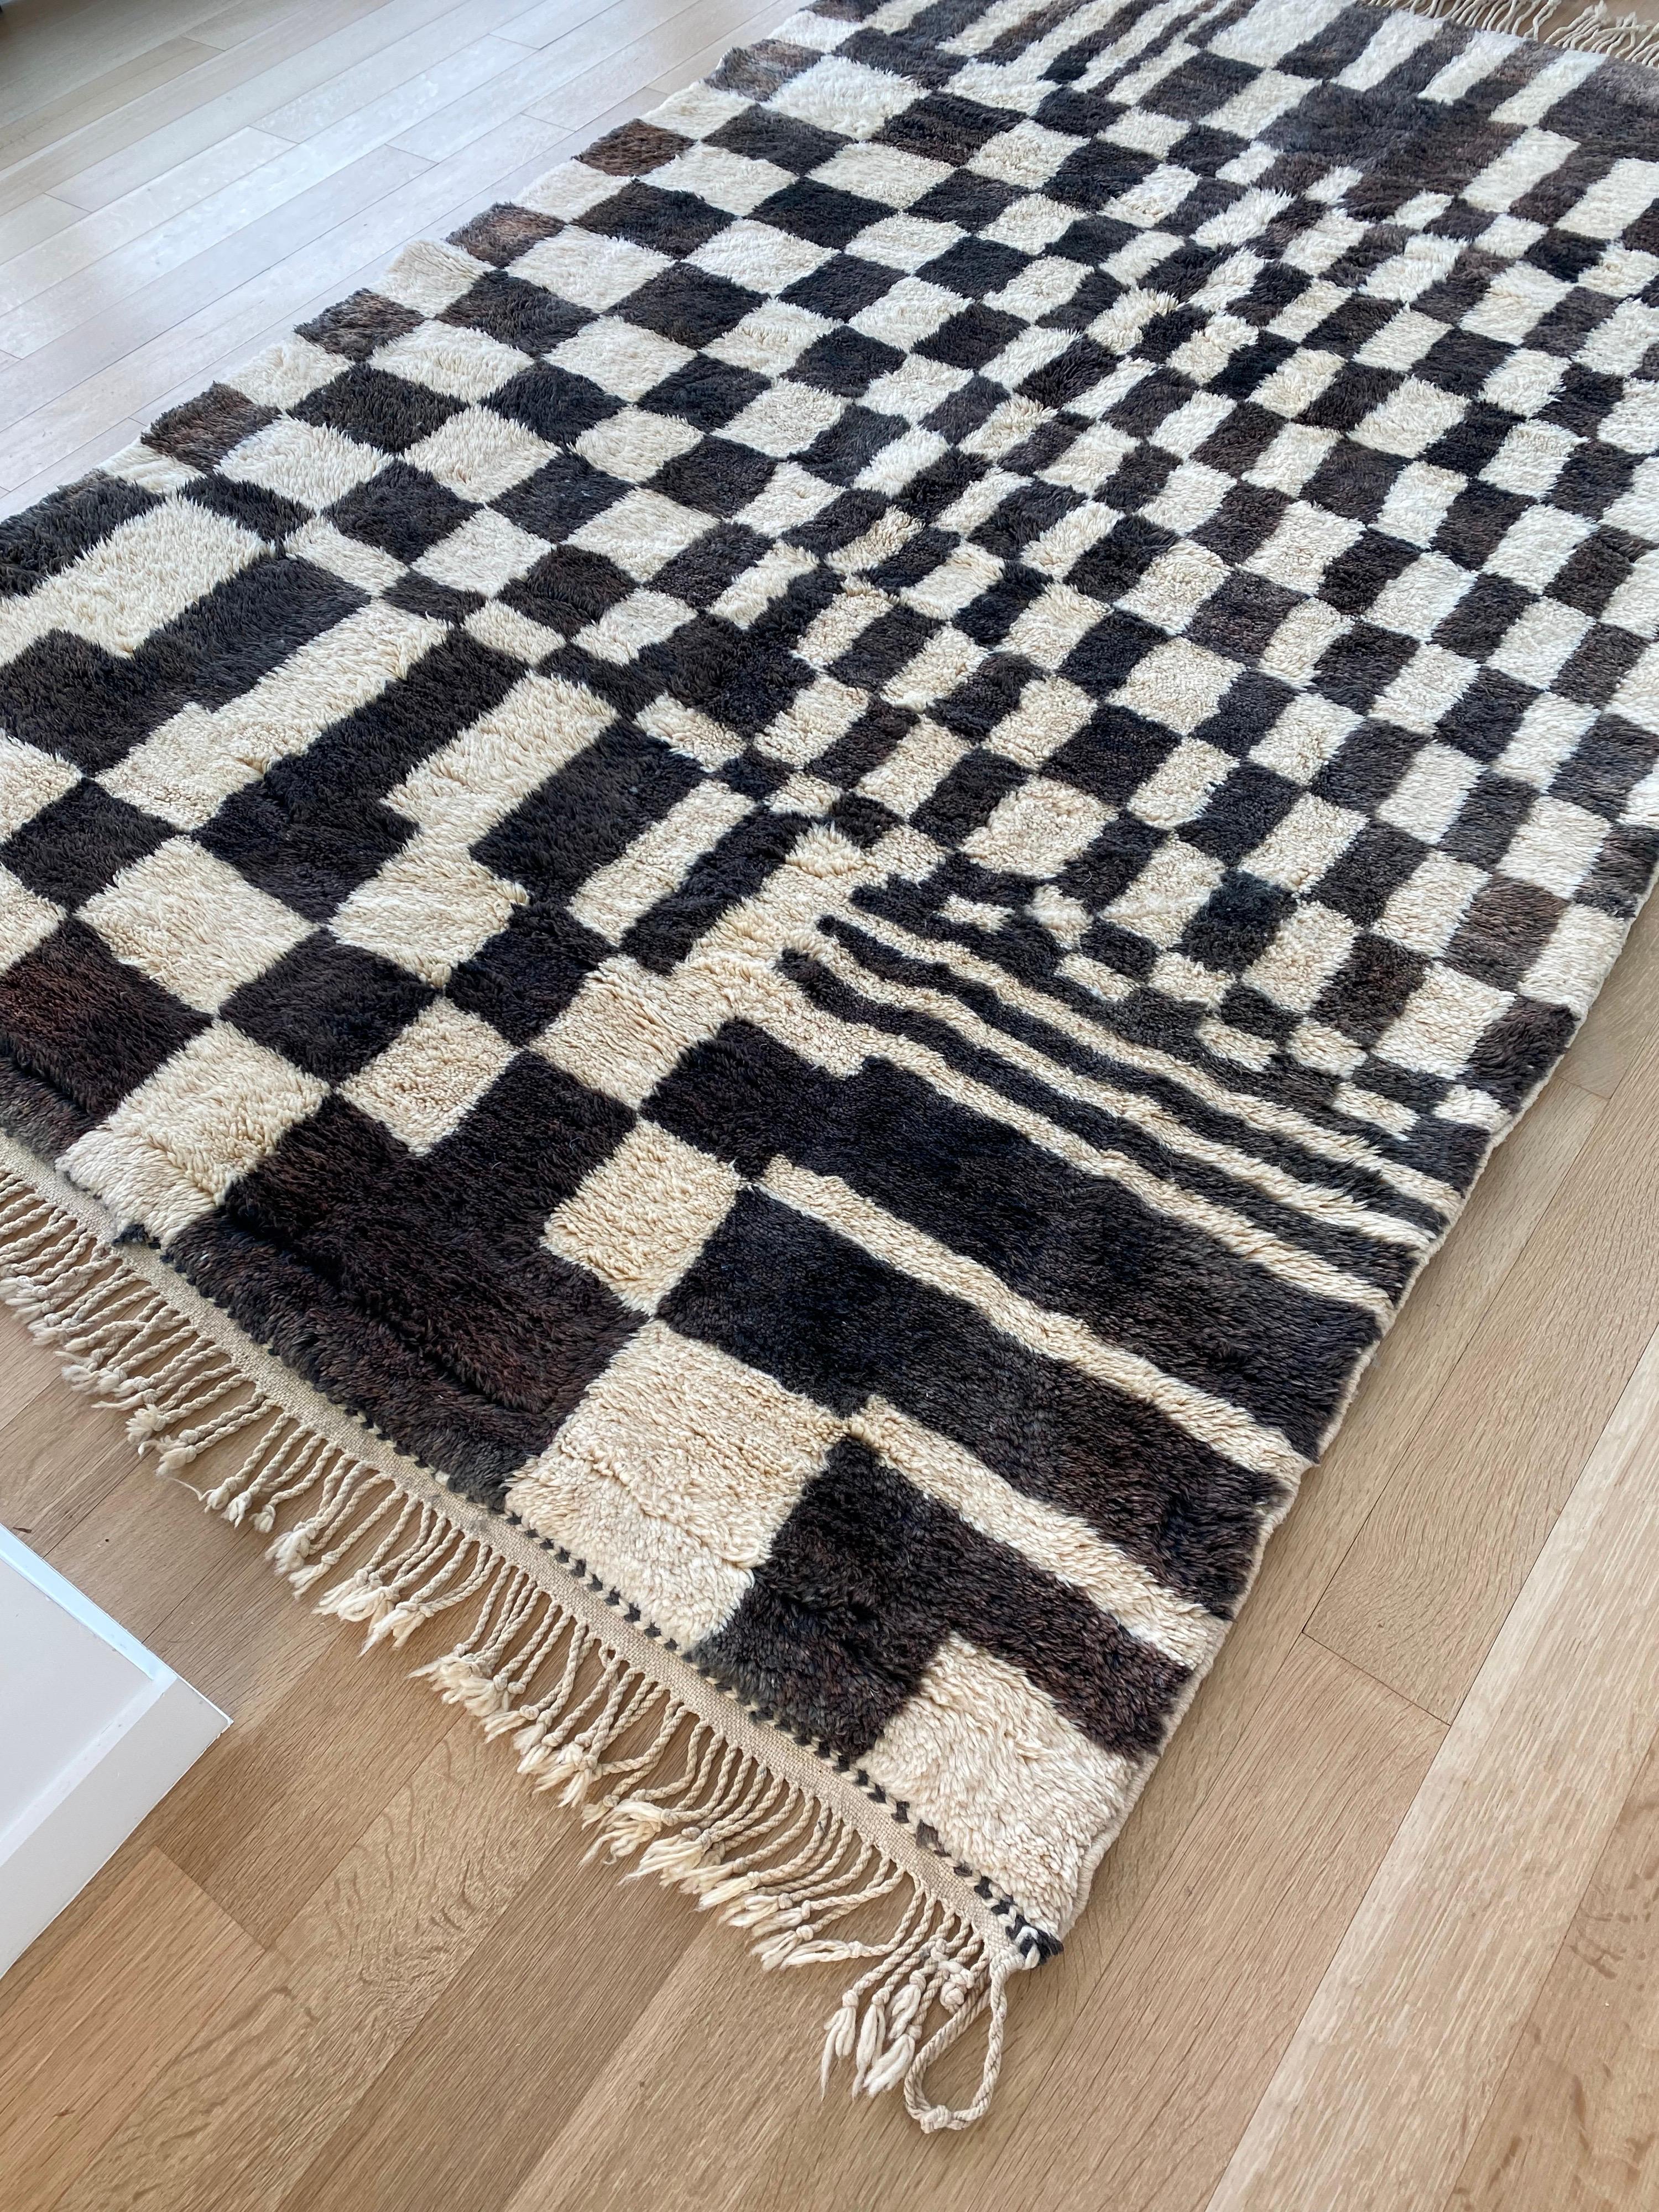 black and white checkered rug